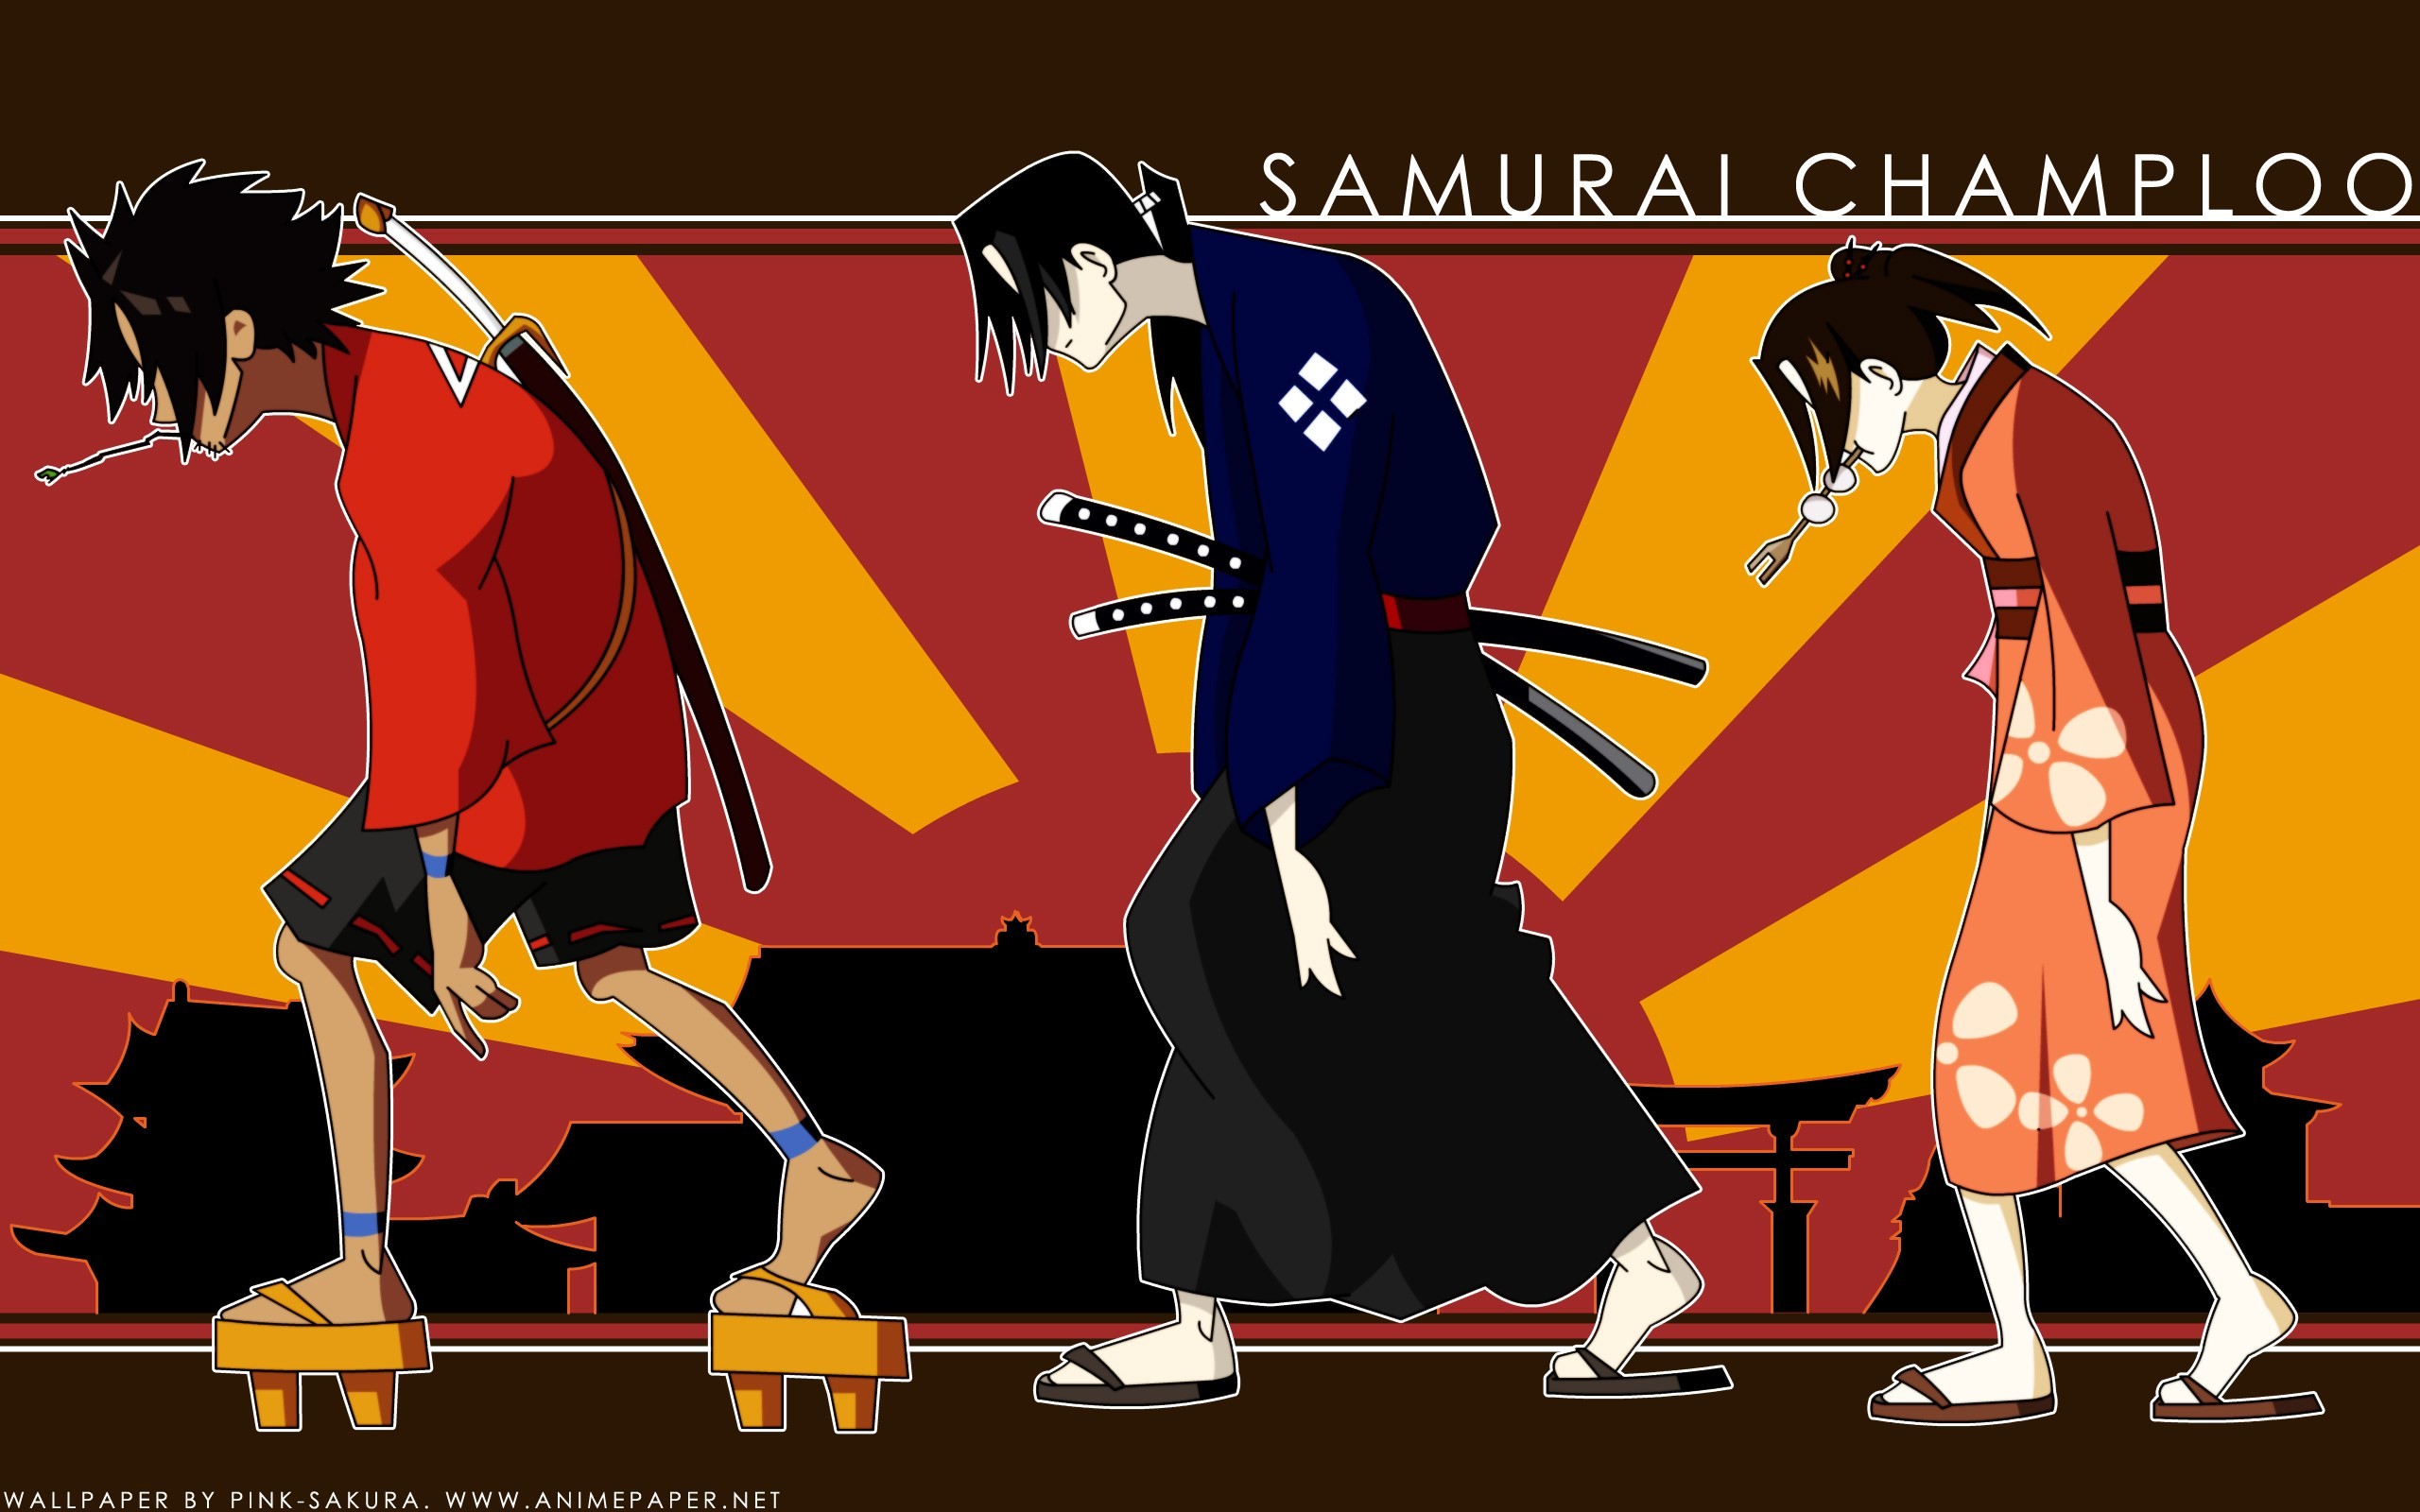 , samurai champloo category – hd wallpaper samurai champloo